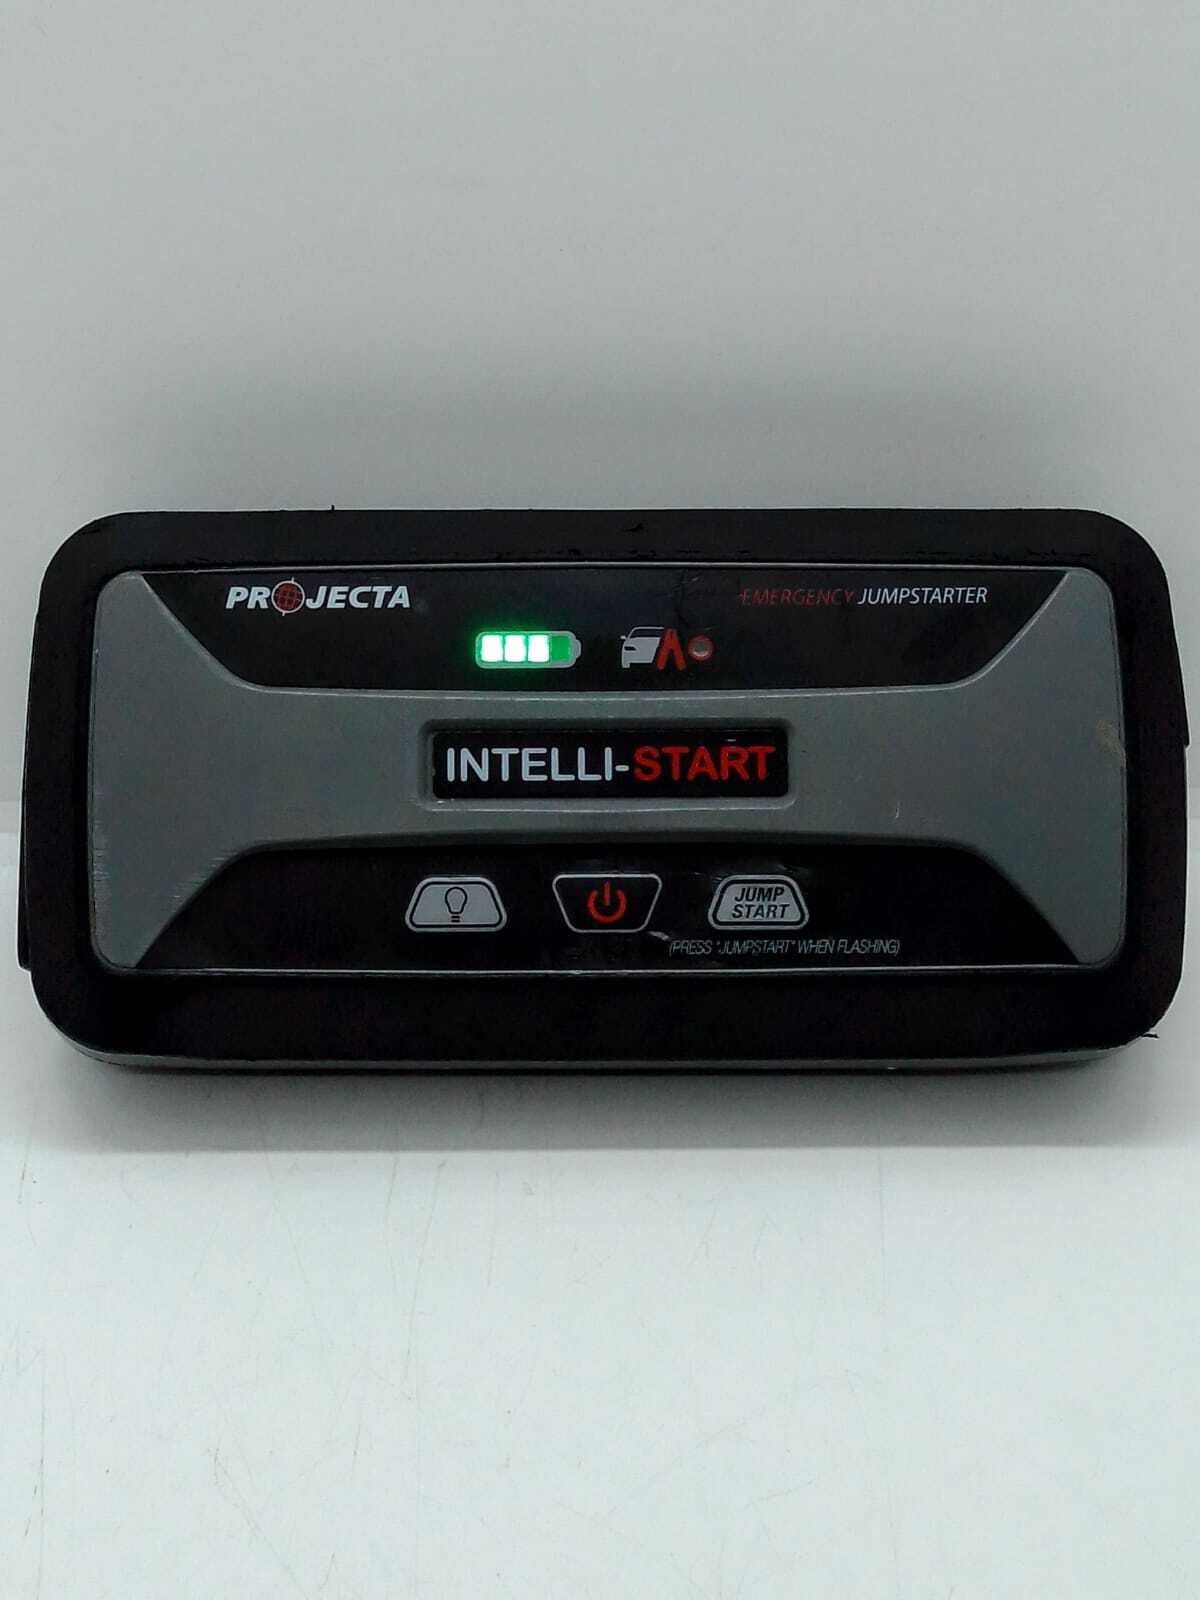 Projecta IS1220 Intelli-Start Emergency Jump-Starter (Pre-owned)